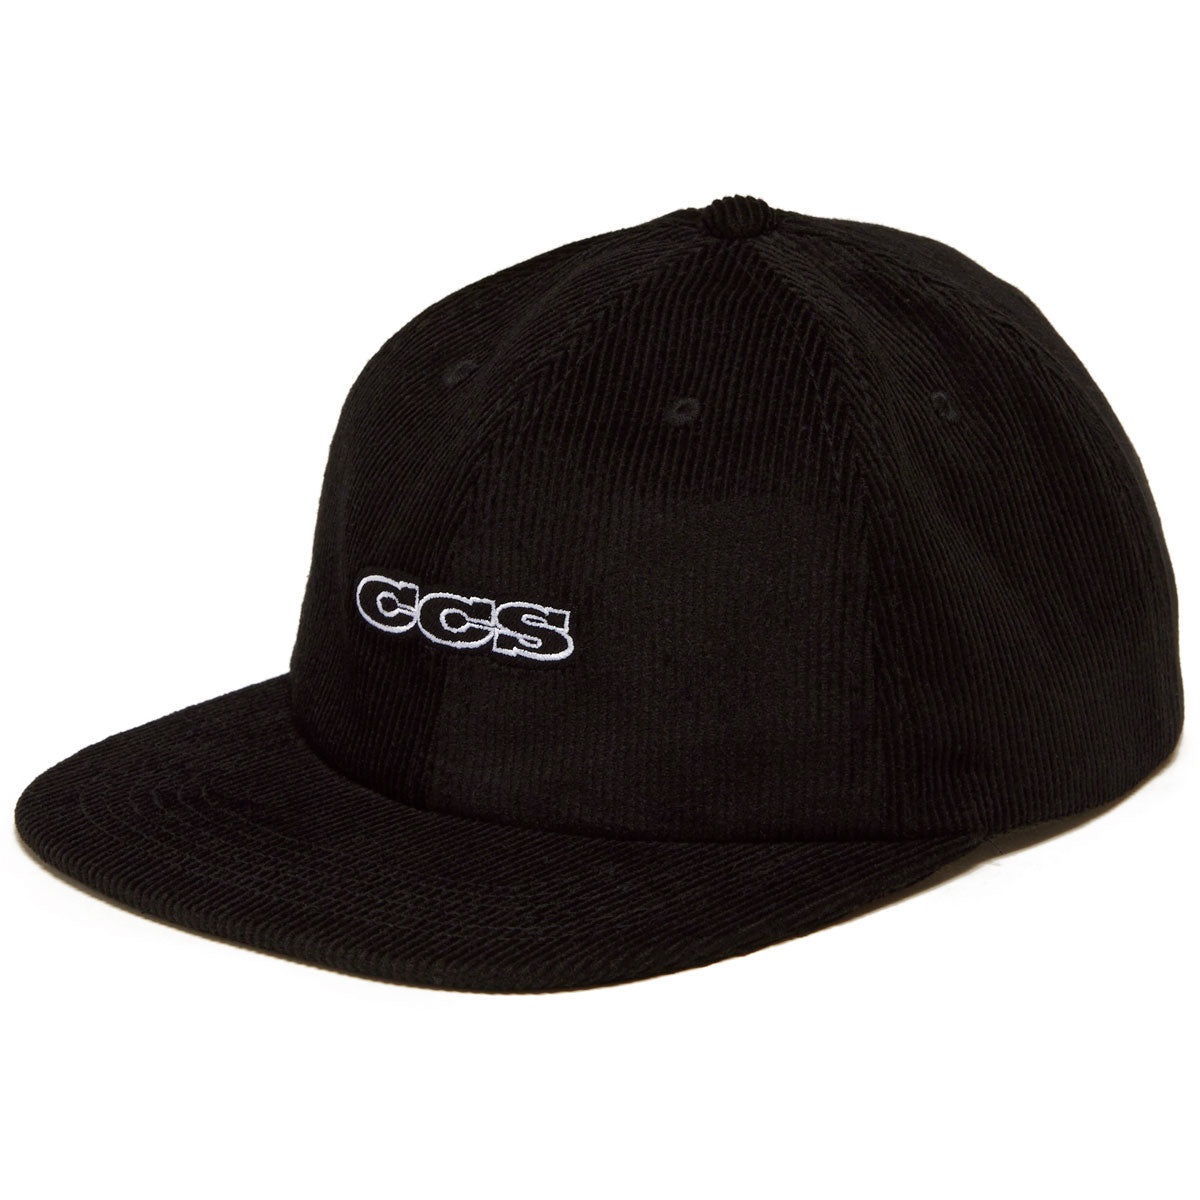 CCS 96 Logo Cord Snapback Hat - Black image 1